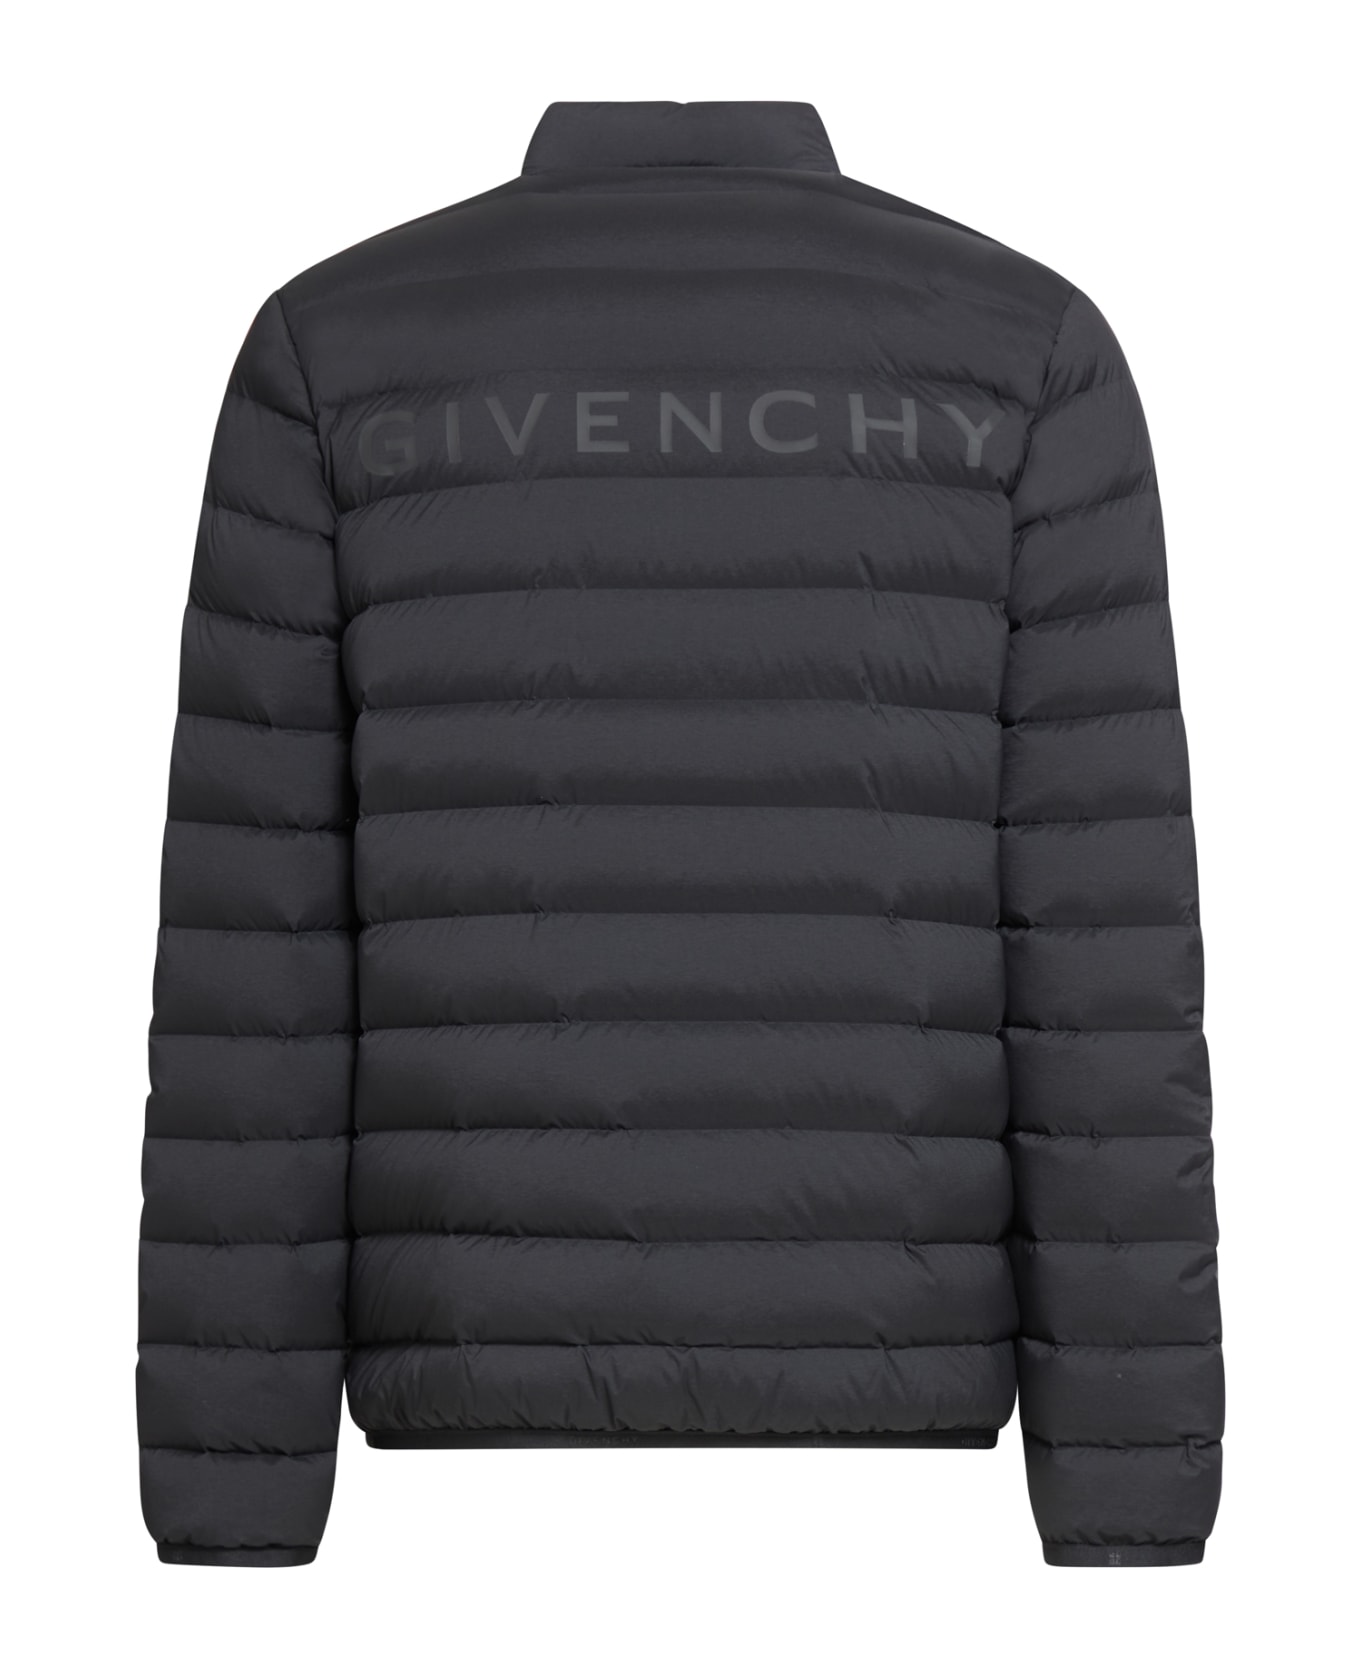 Givenchy Light Puffer Jacket - Black